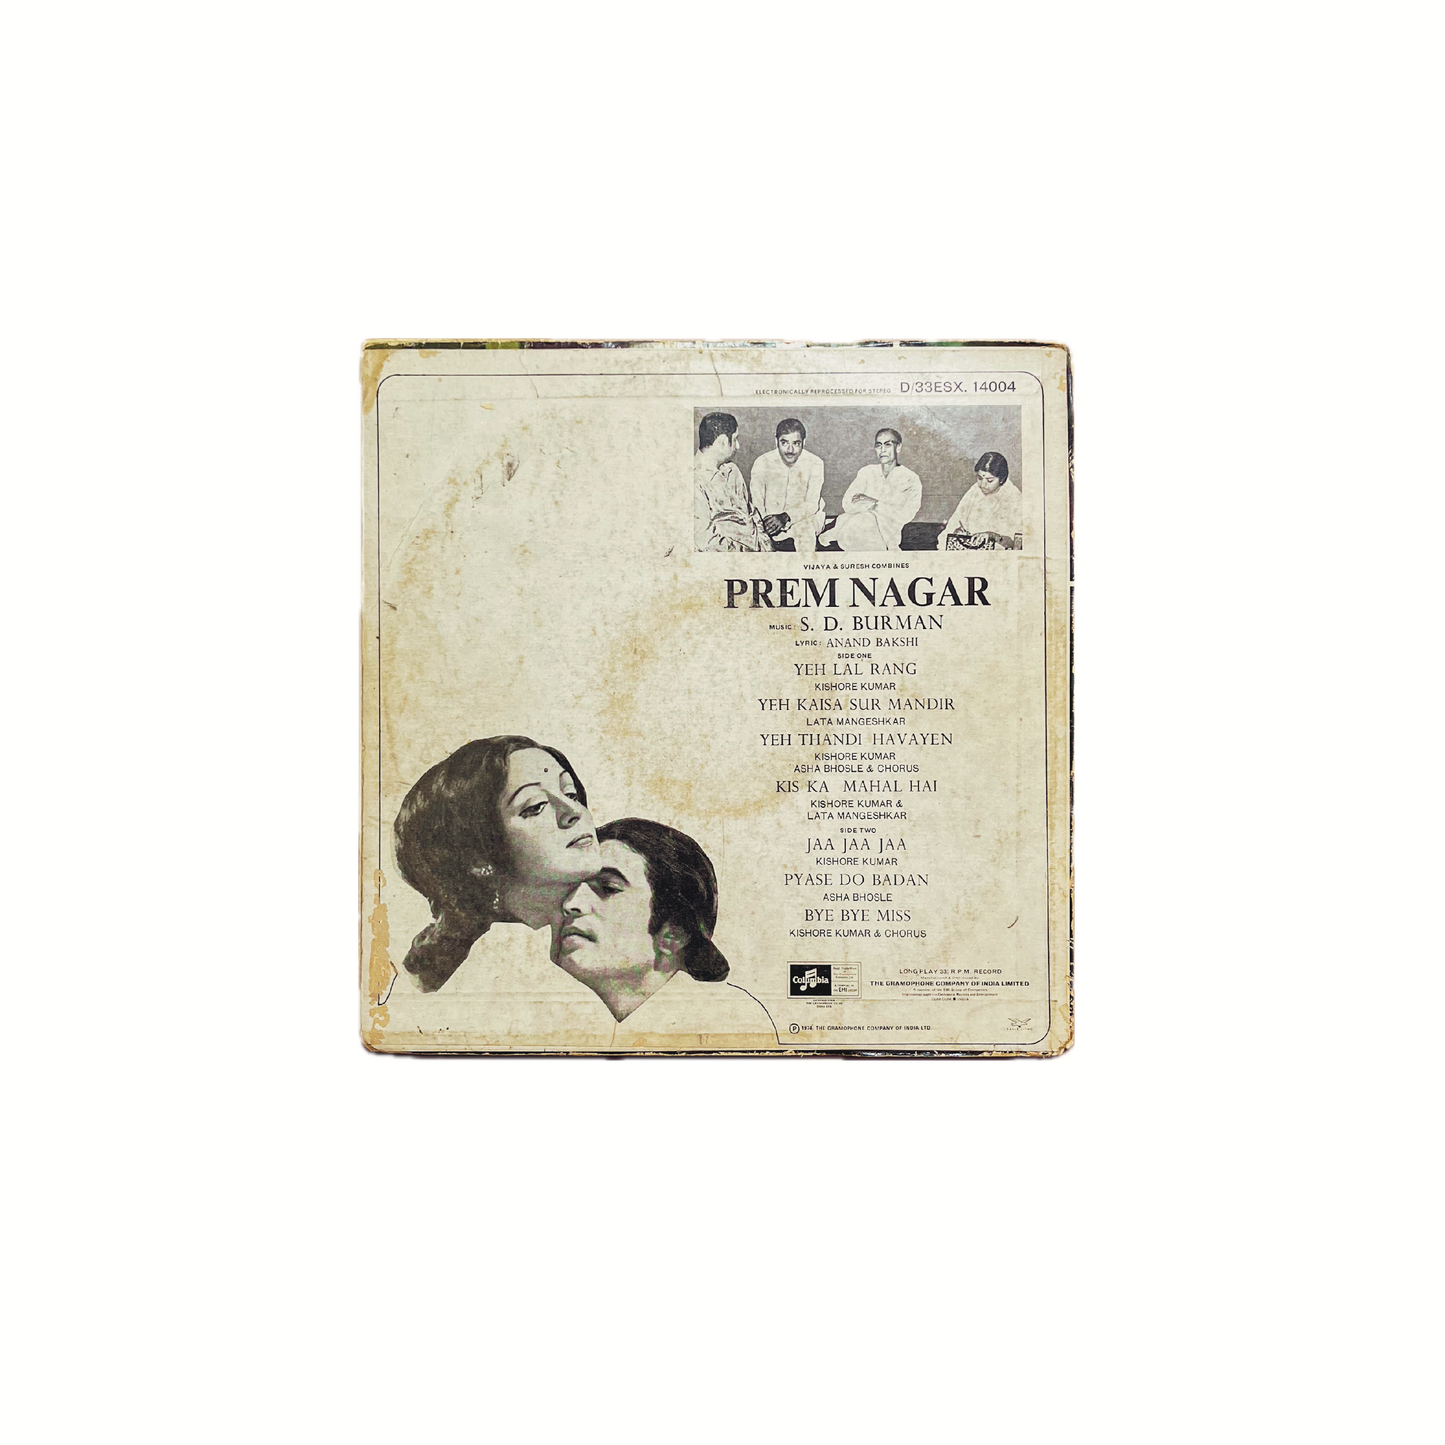 'PREM NAGAR' -  VINTAGE VINYL LP RECORD 1974